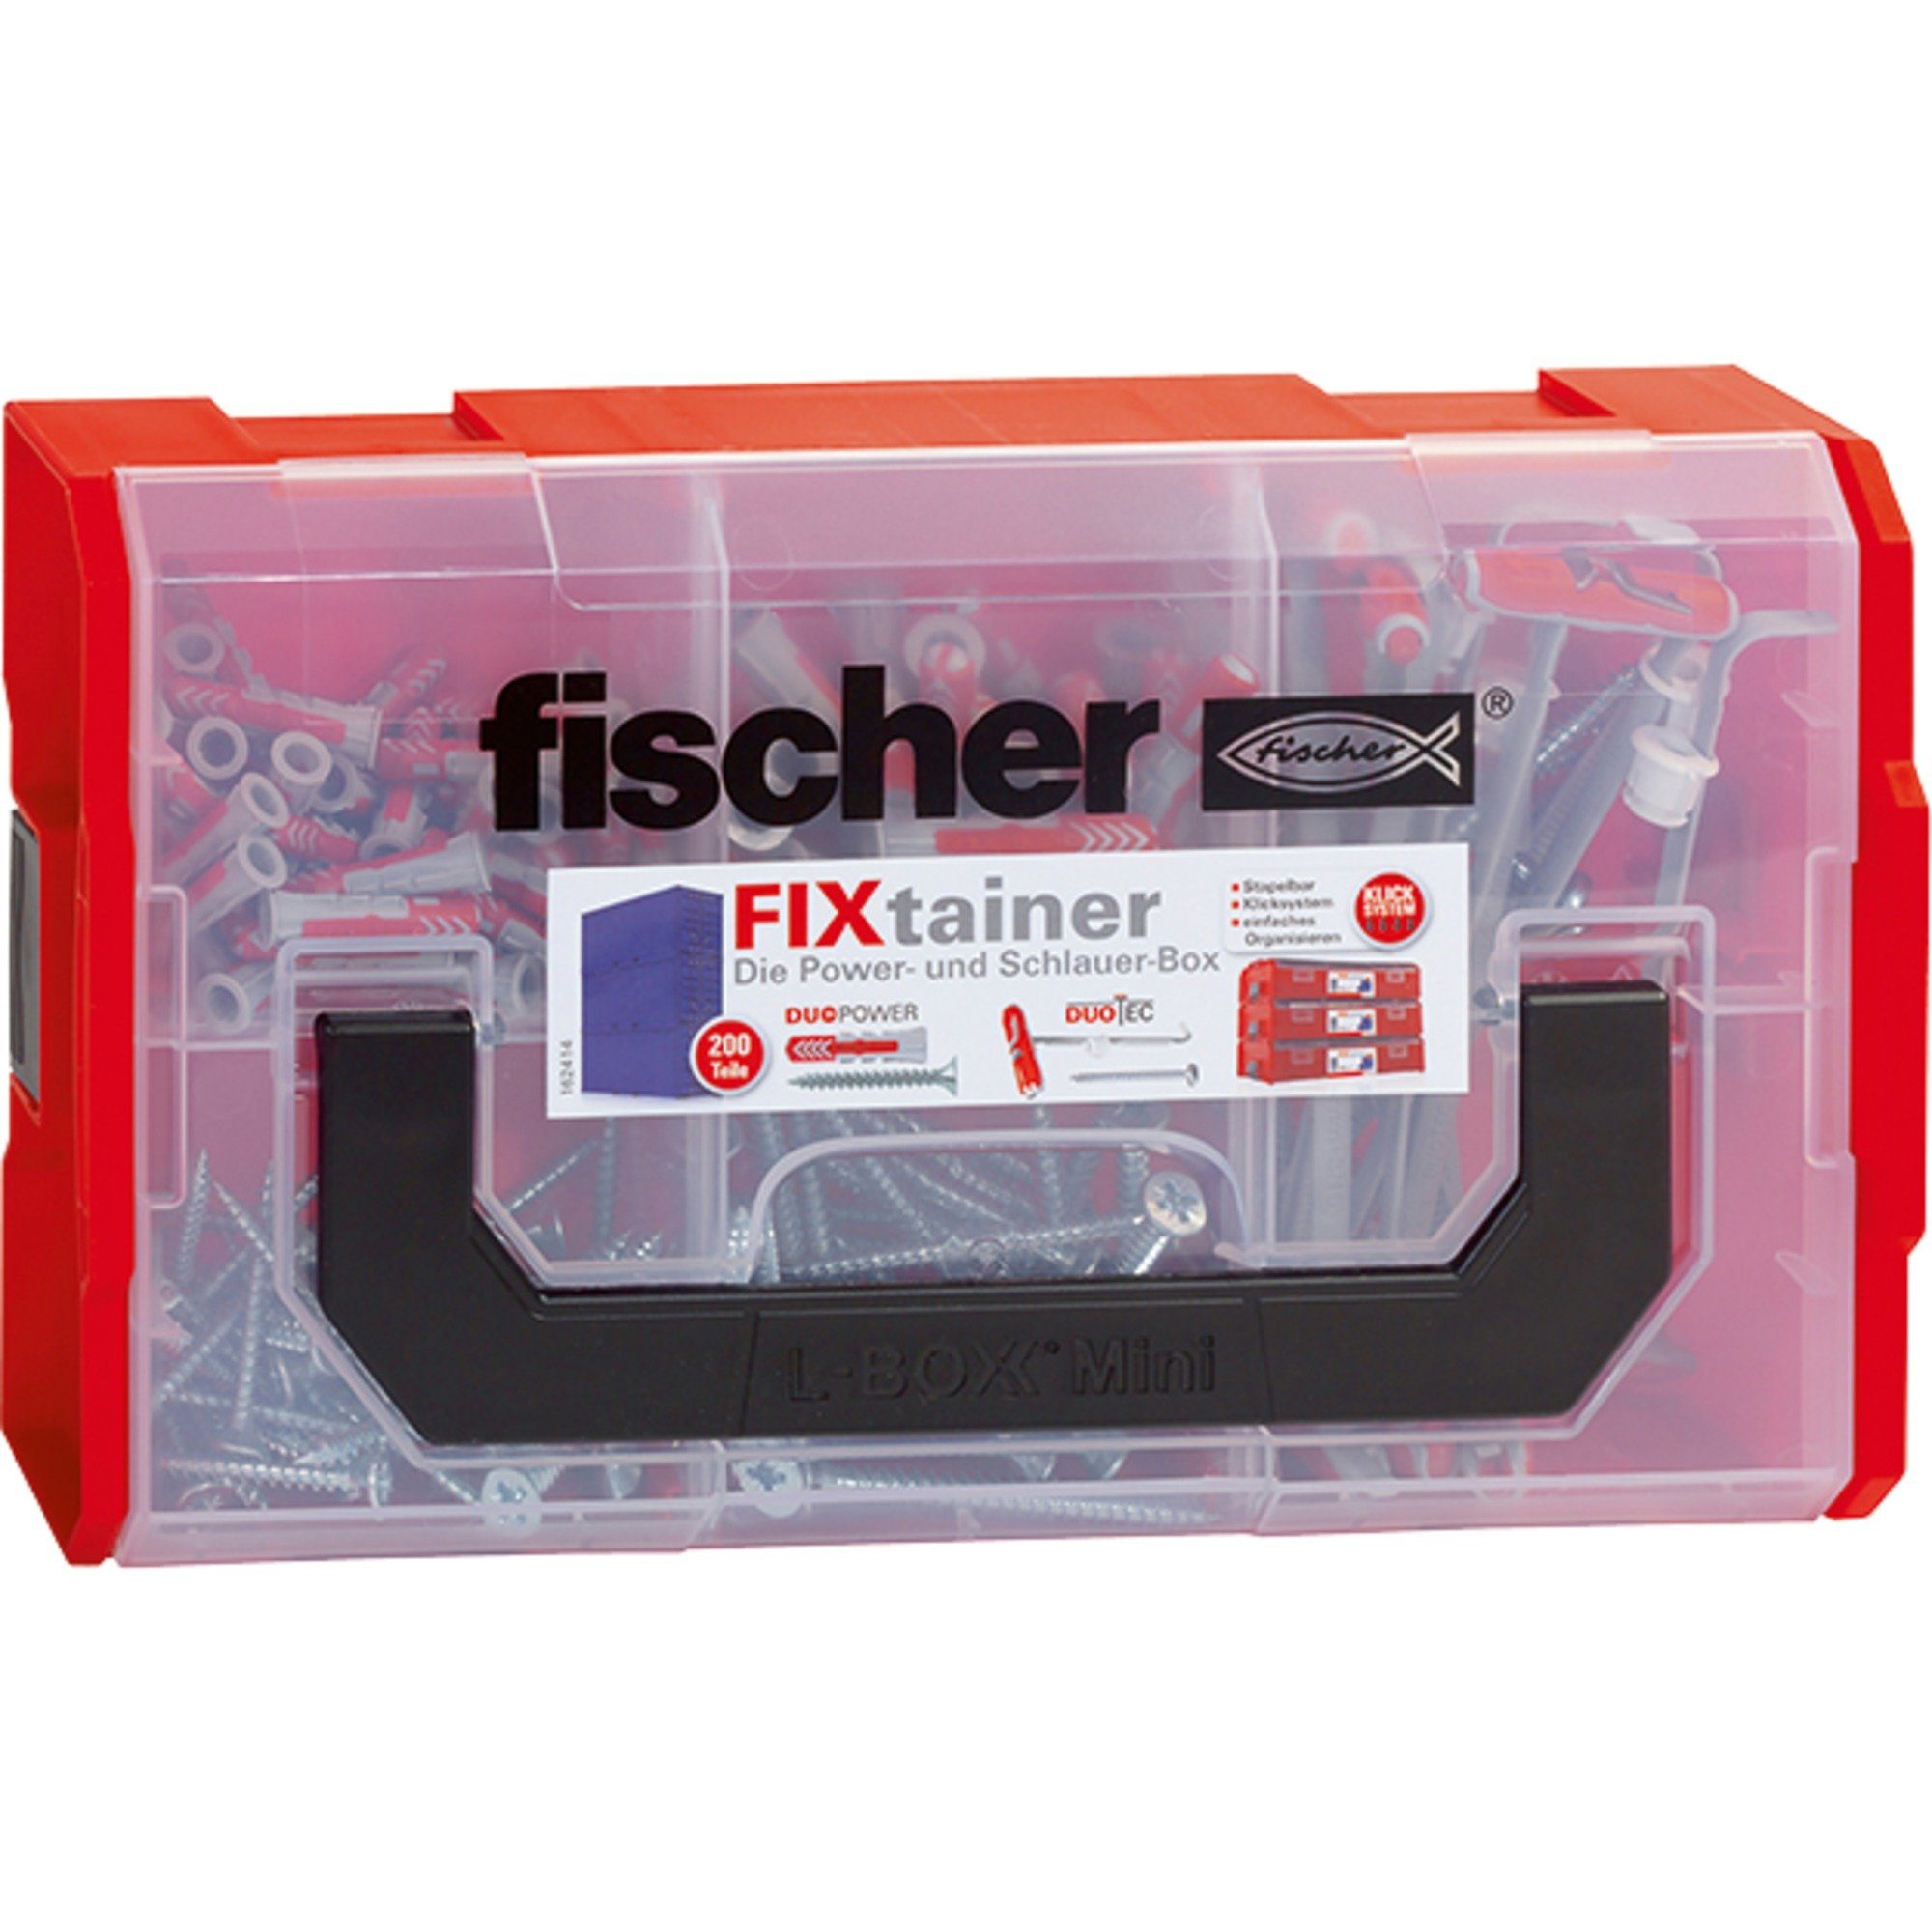 Universaldübel Fischer FixTainer-DUOPOWER/DUOTEC, fischer (mit Dübel,